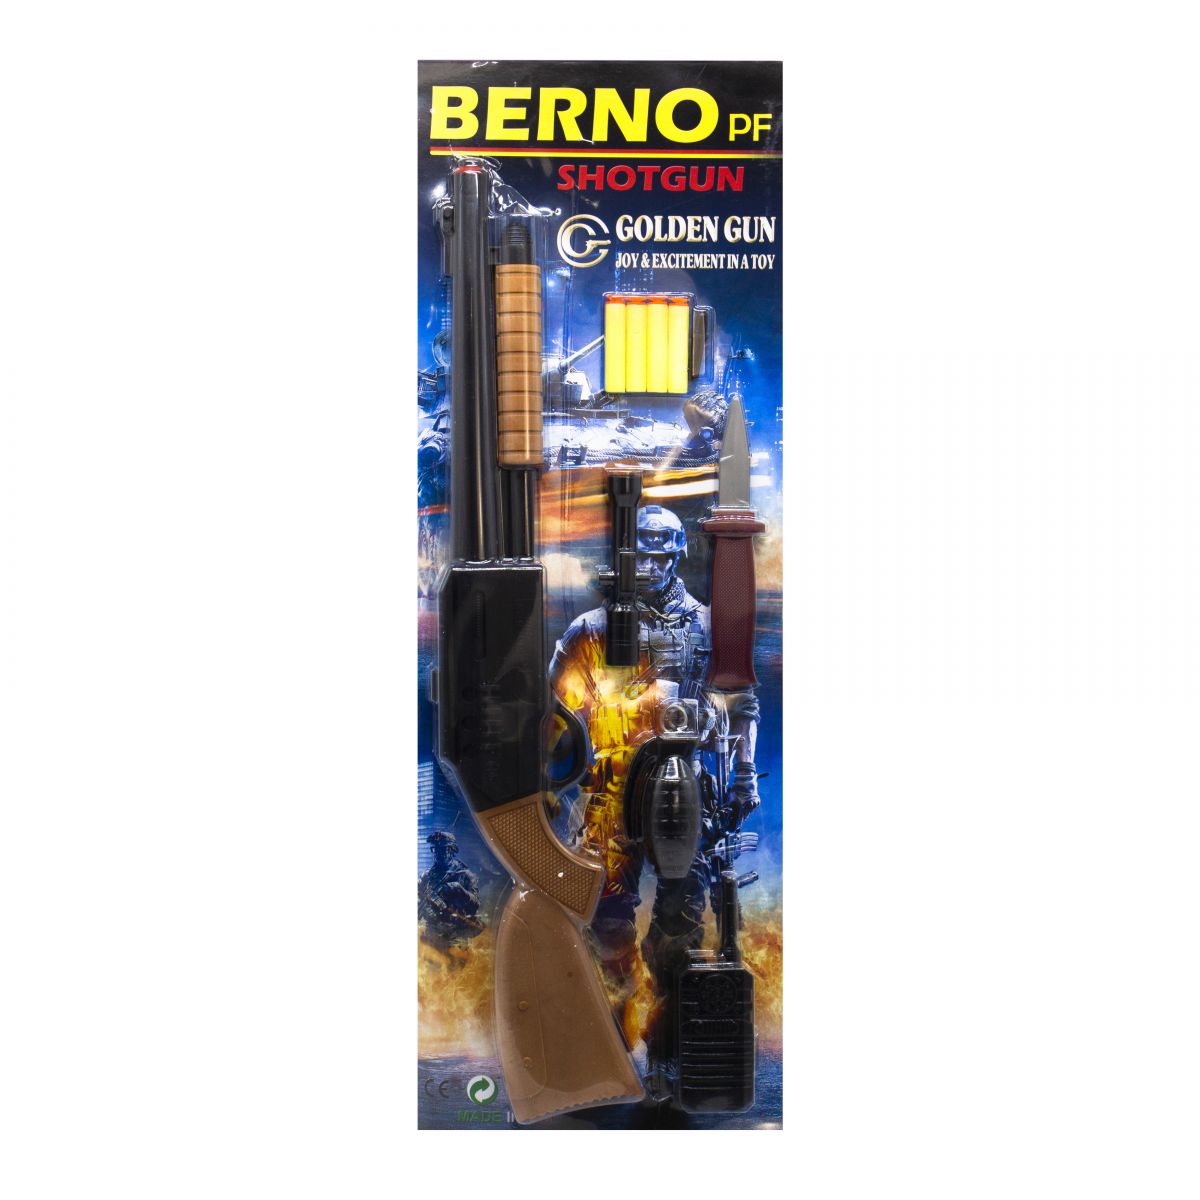 Дробовик "Berno" с мягкими патронами и аксессуарами